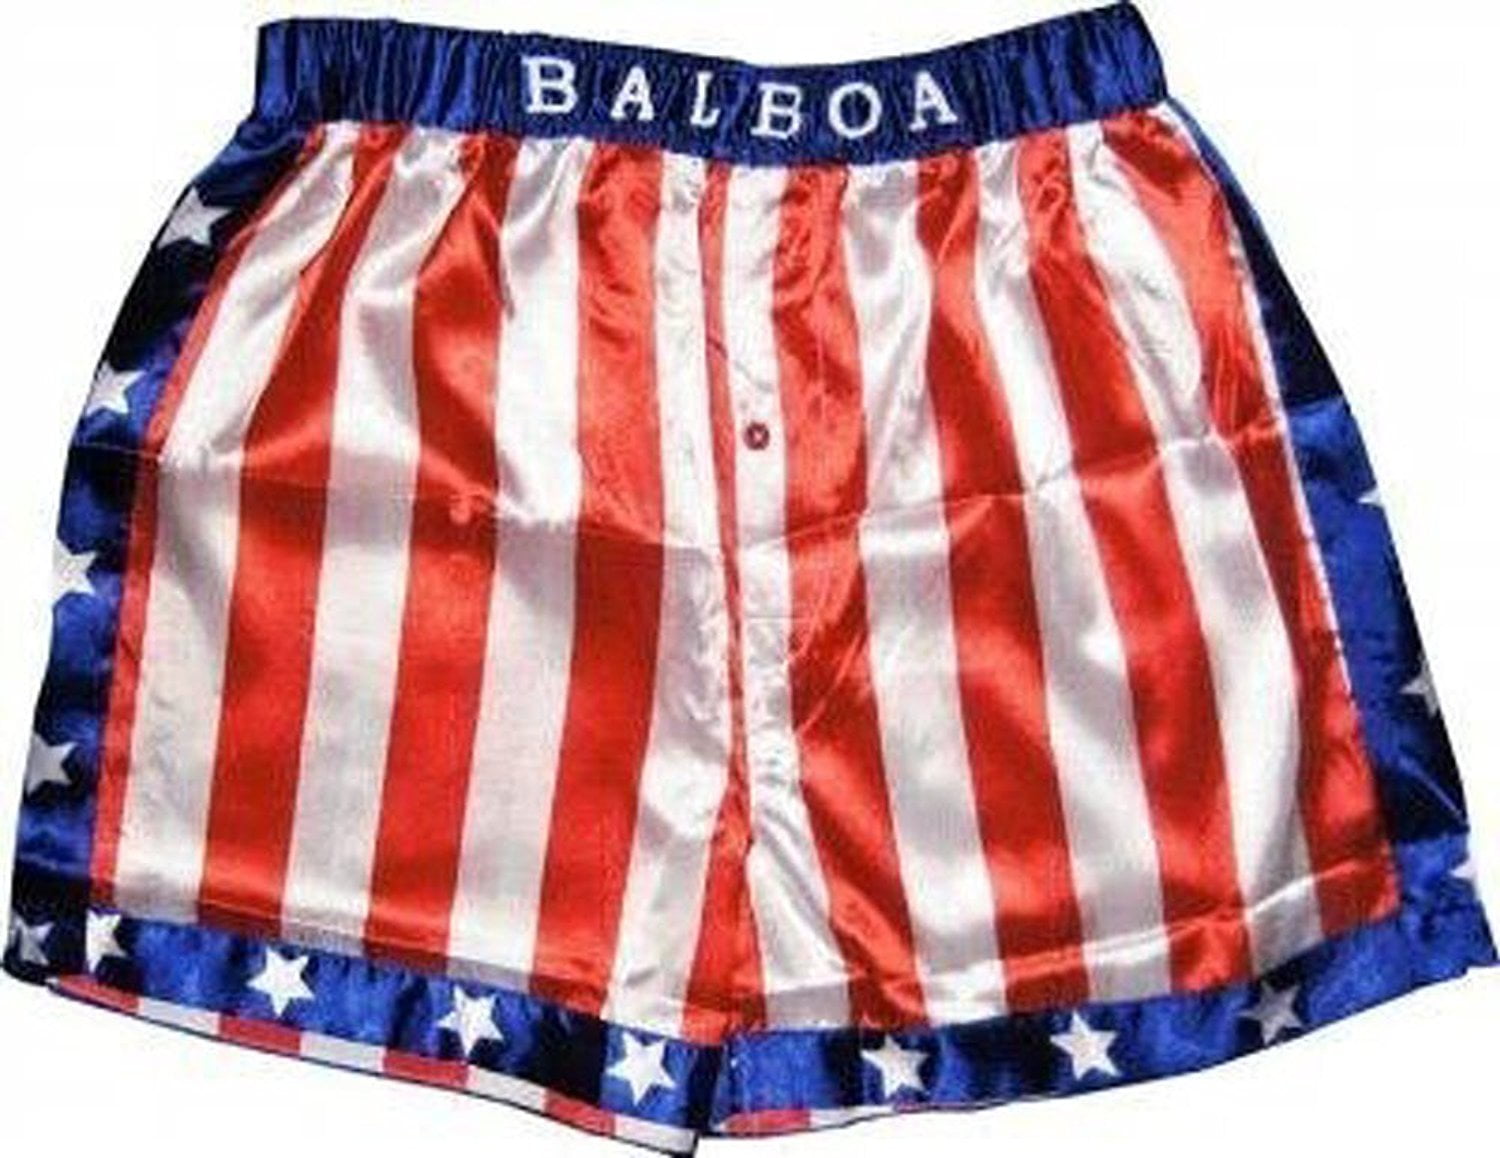 Kids Shorts Boys Boxing Trunks Outfit Robe Shorts Belt Rocky Balboa Cosplay